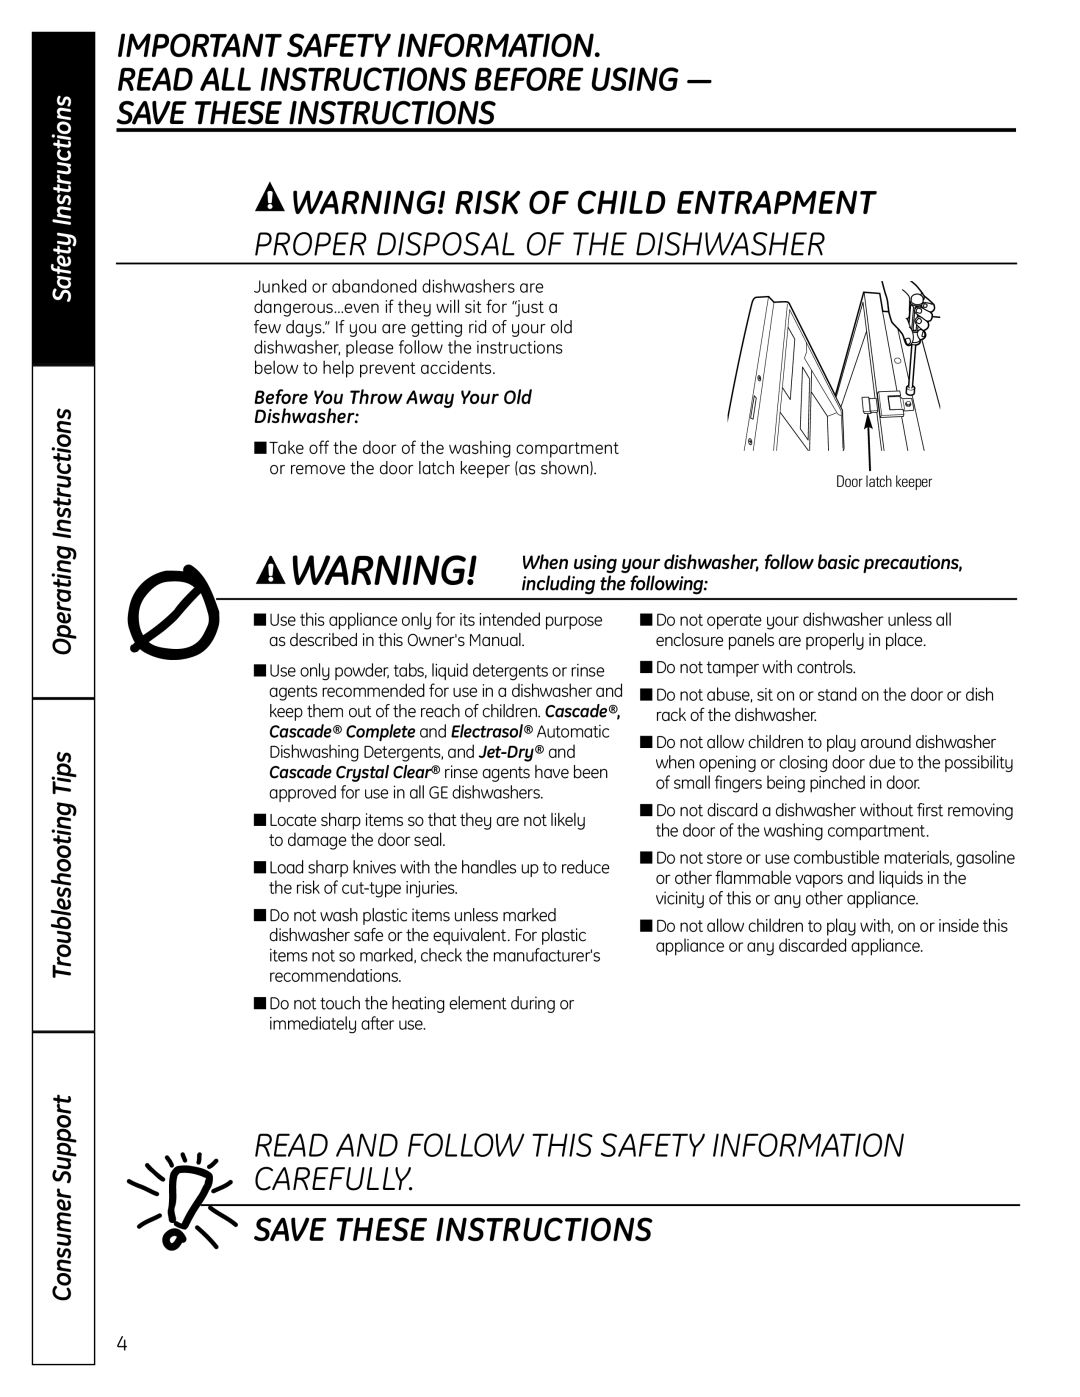 GE GLC4100 owner manual Warning! Risk Of Child Entrapment, Proper Disposal Of The Dishwasher, Important Safety Information 